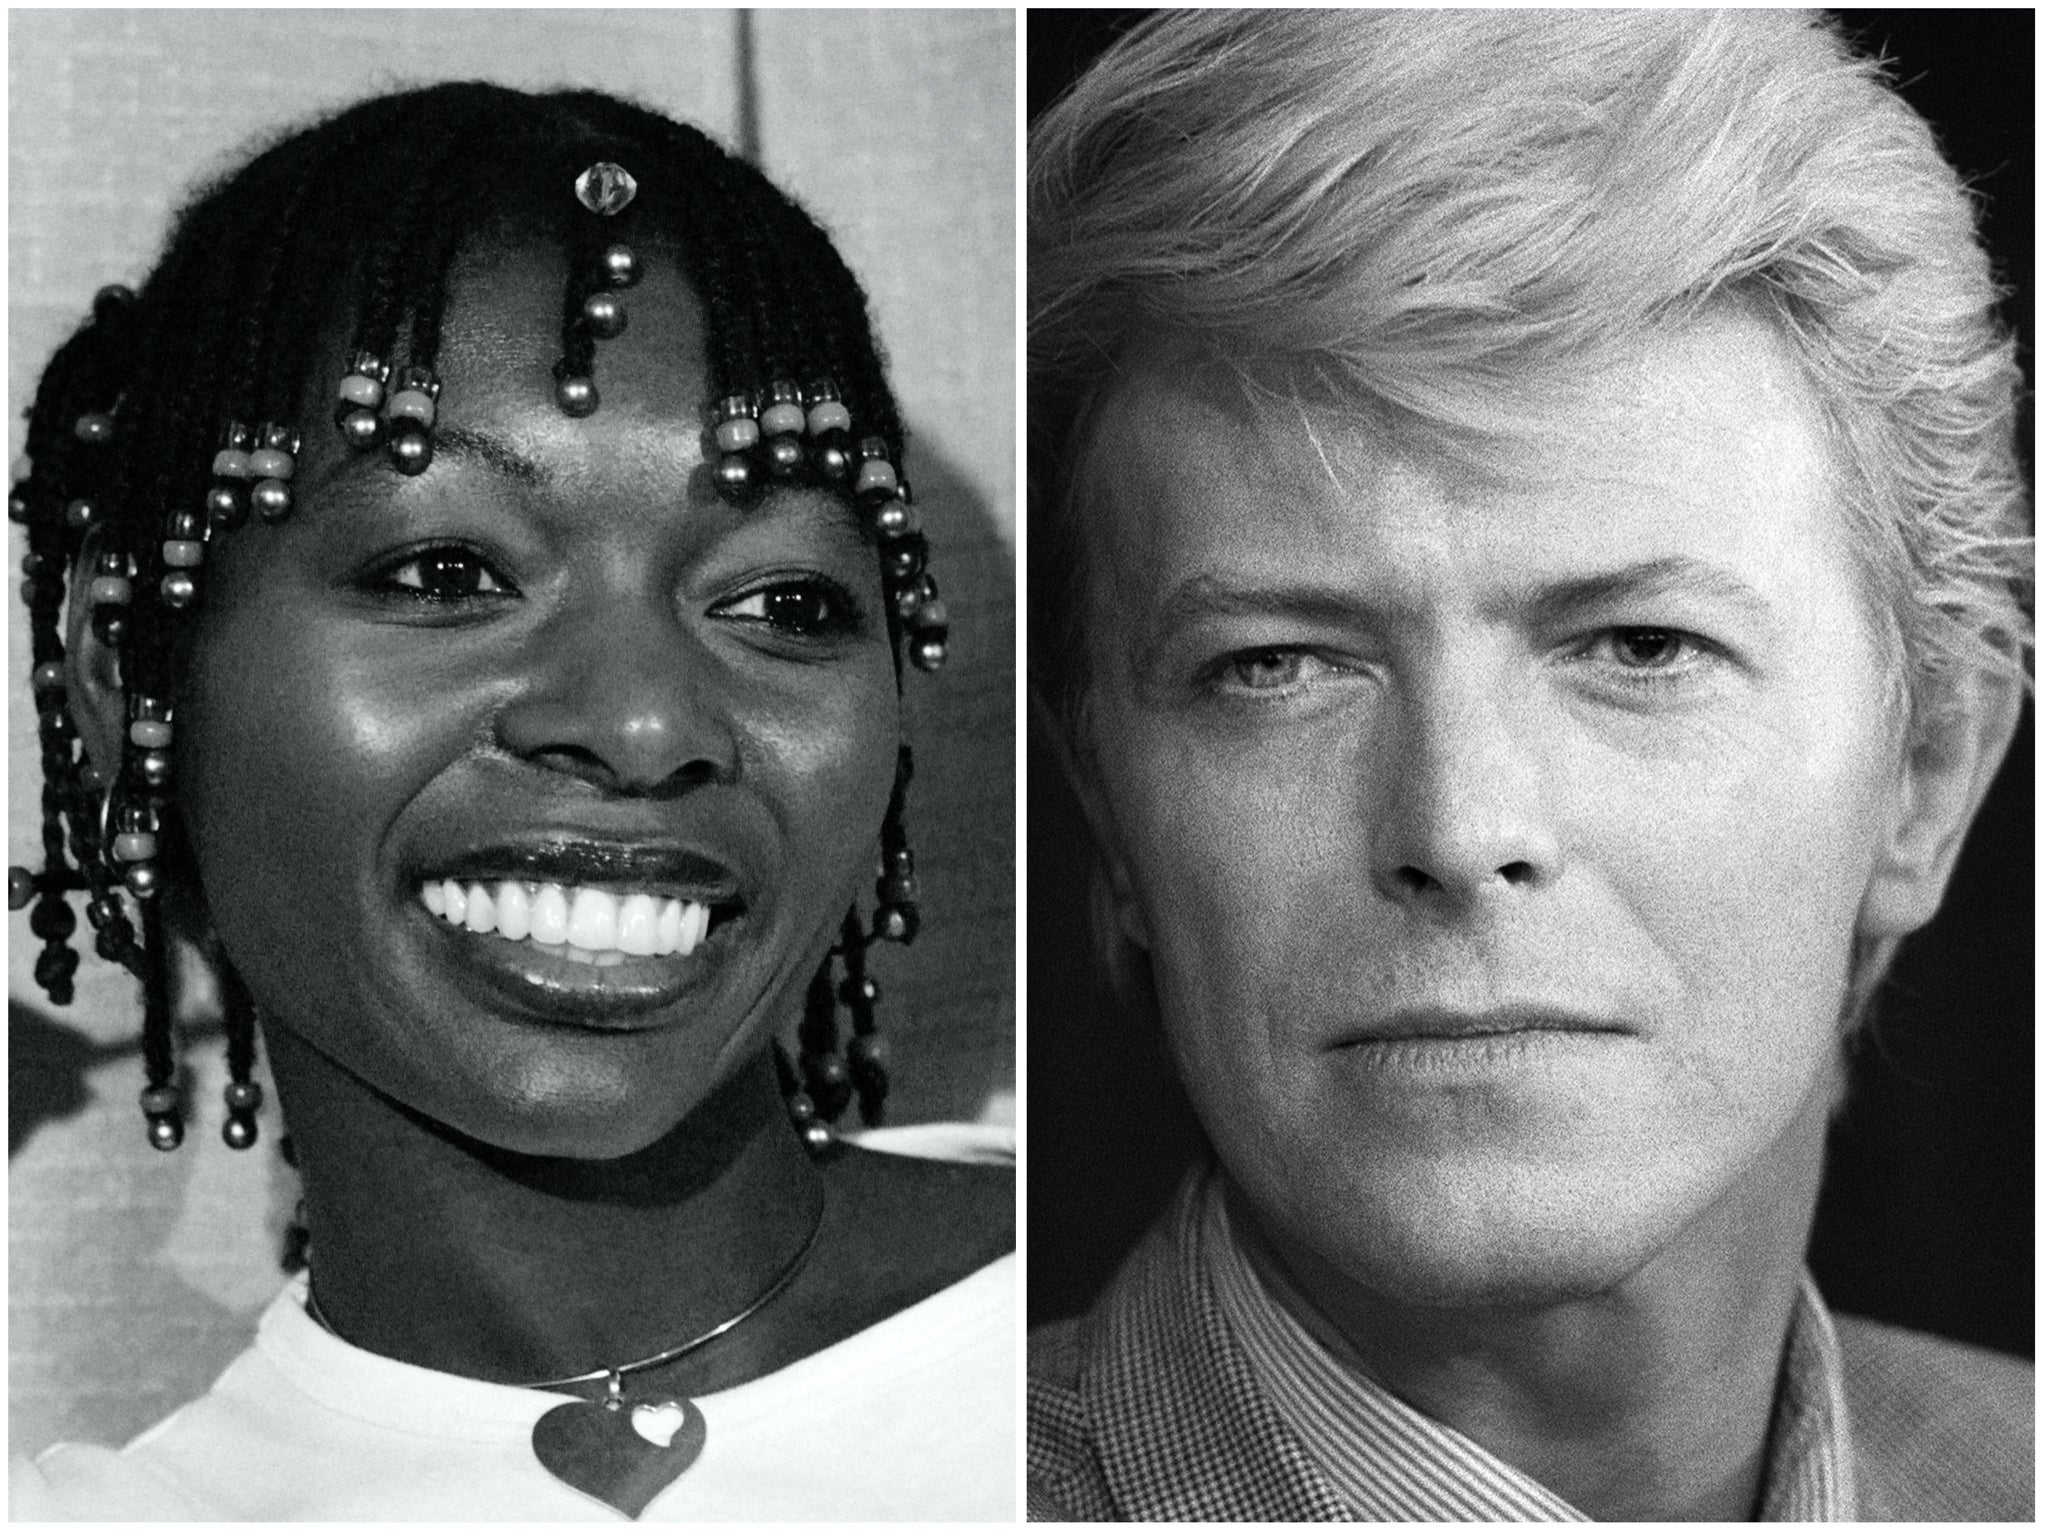 Floella Benjamin in 1977, and David Bowie in 1983